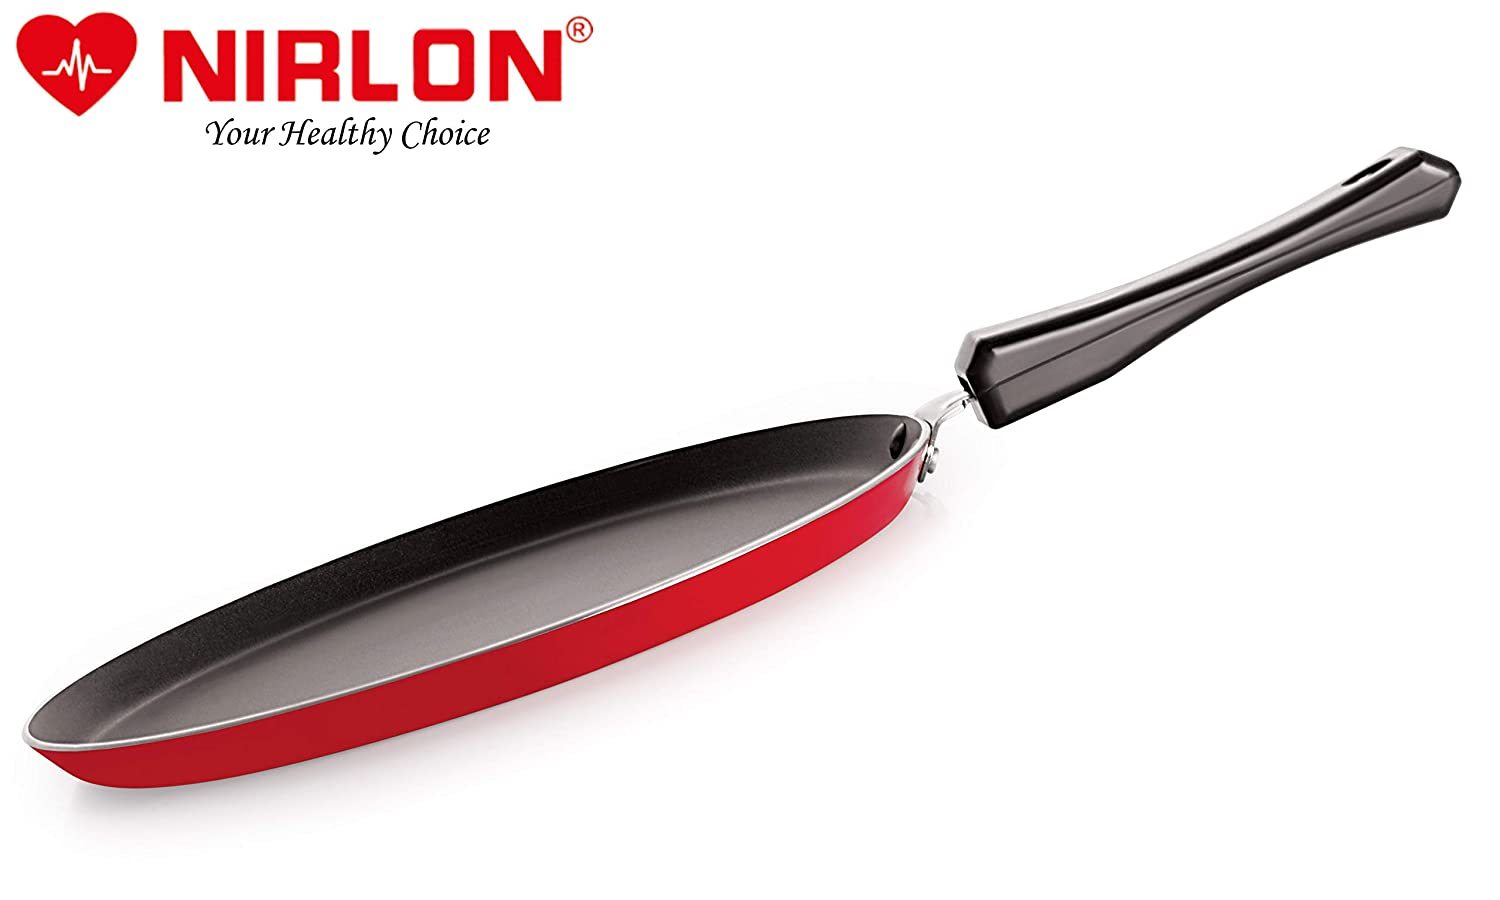 Nirlon Special Non-stick Aluminium Flat Tawa, Red (26cm)